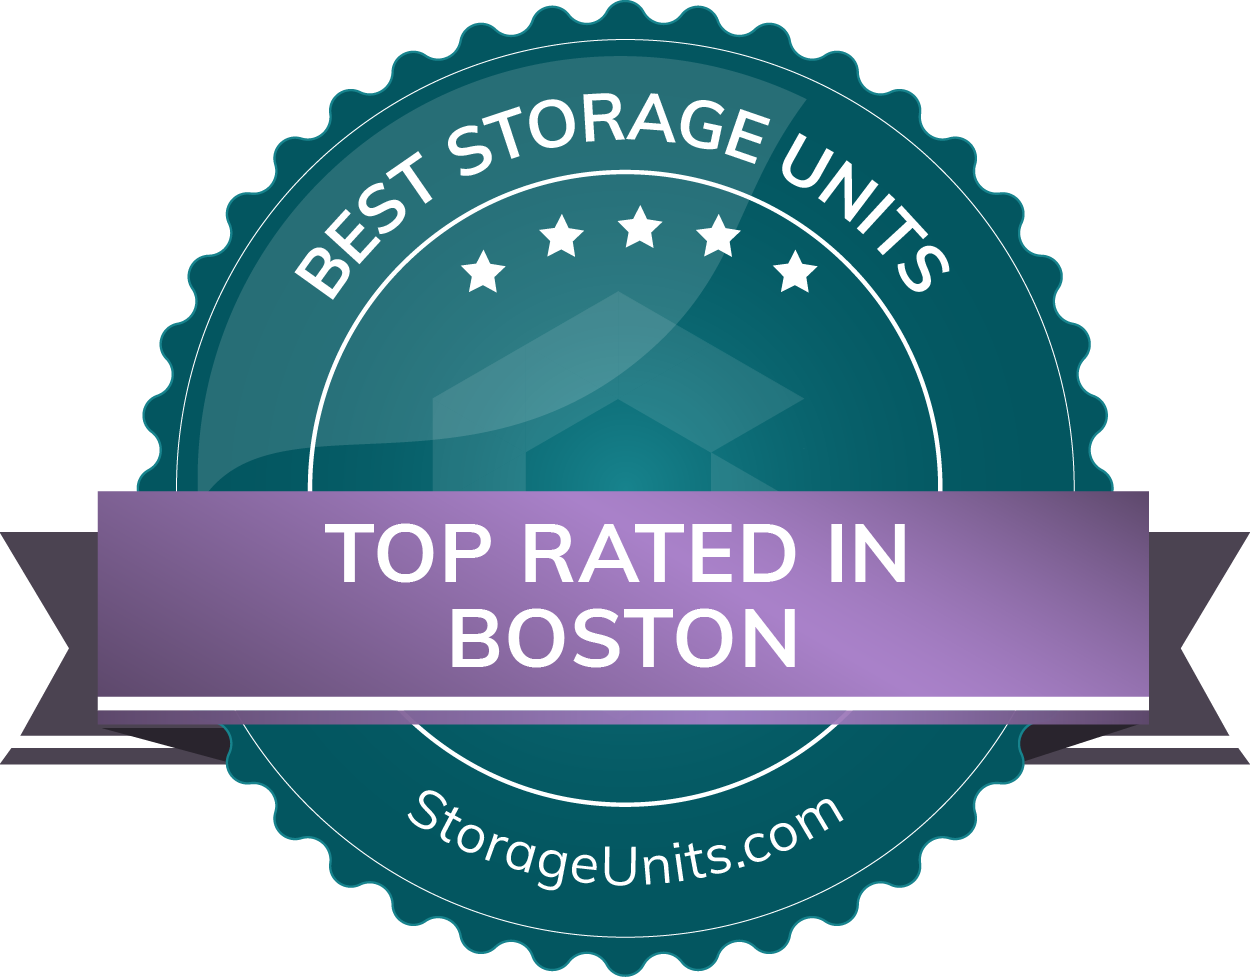 Best Self Storage Units in Boston, Massachusetts of 2022